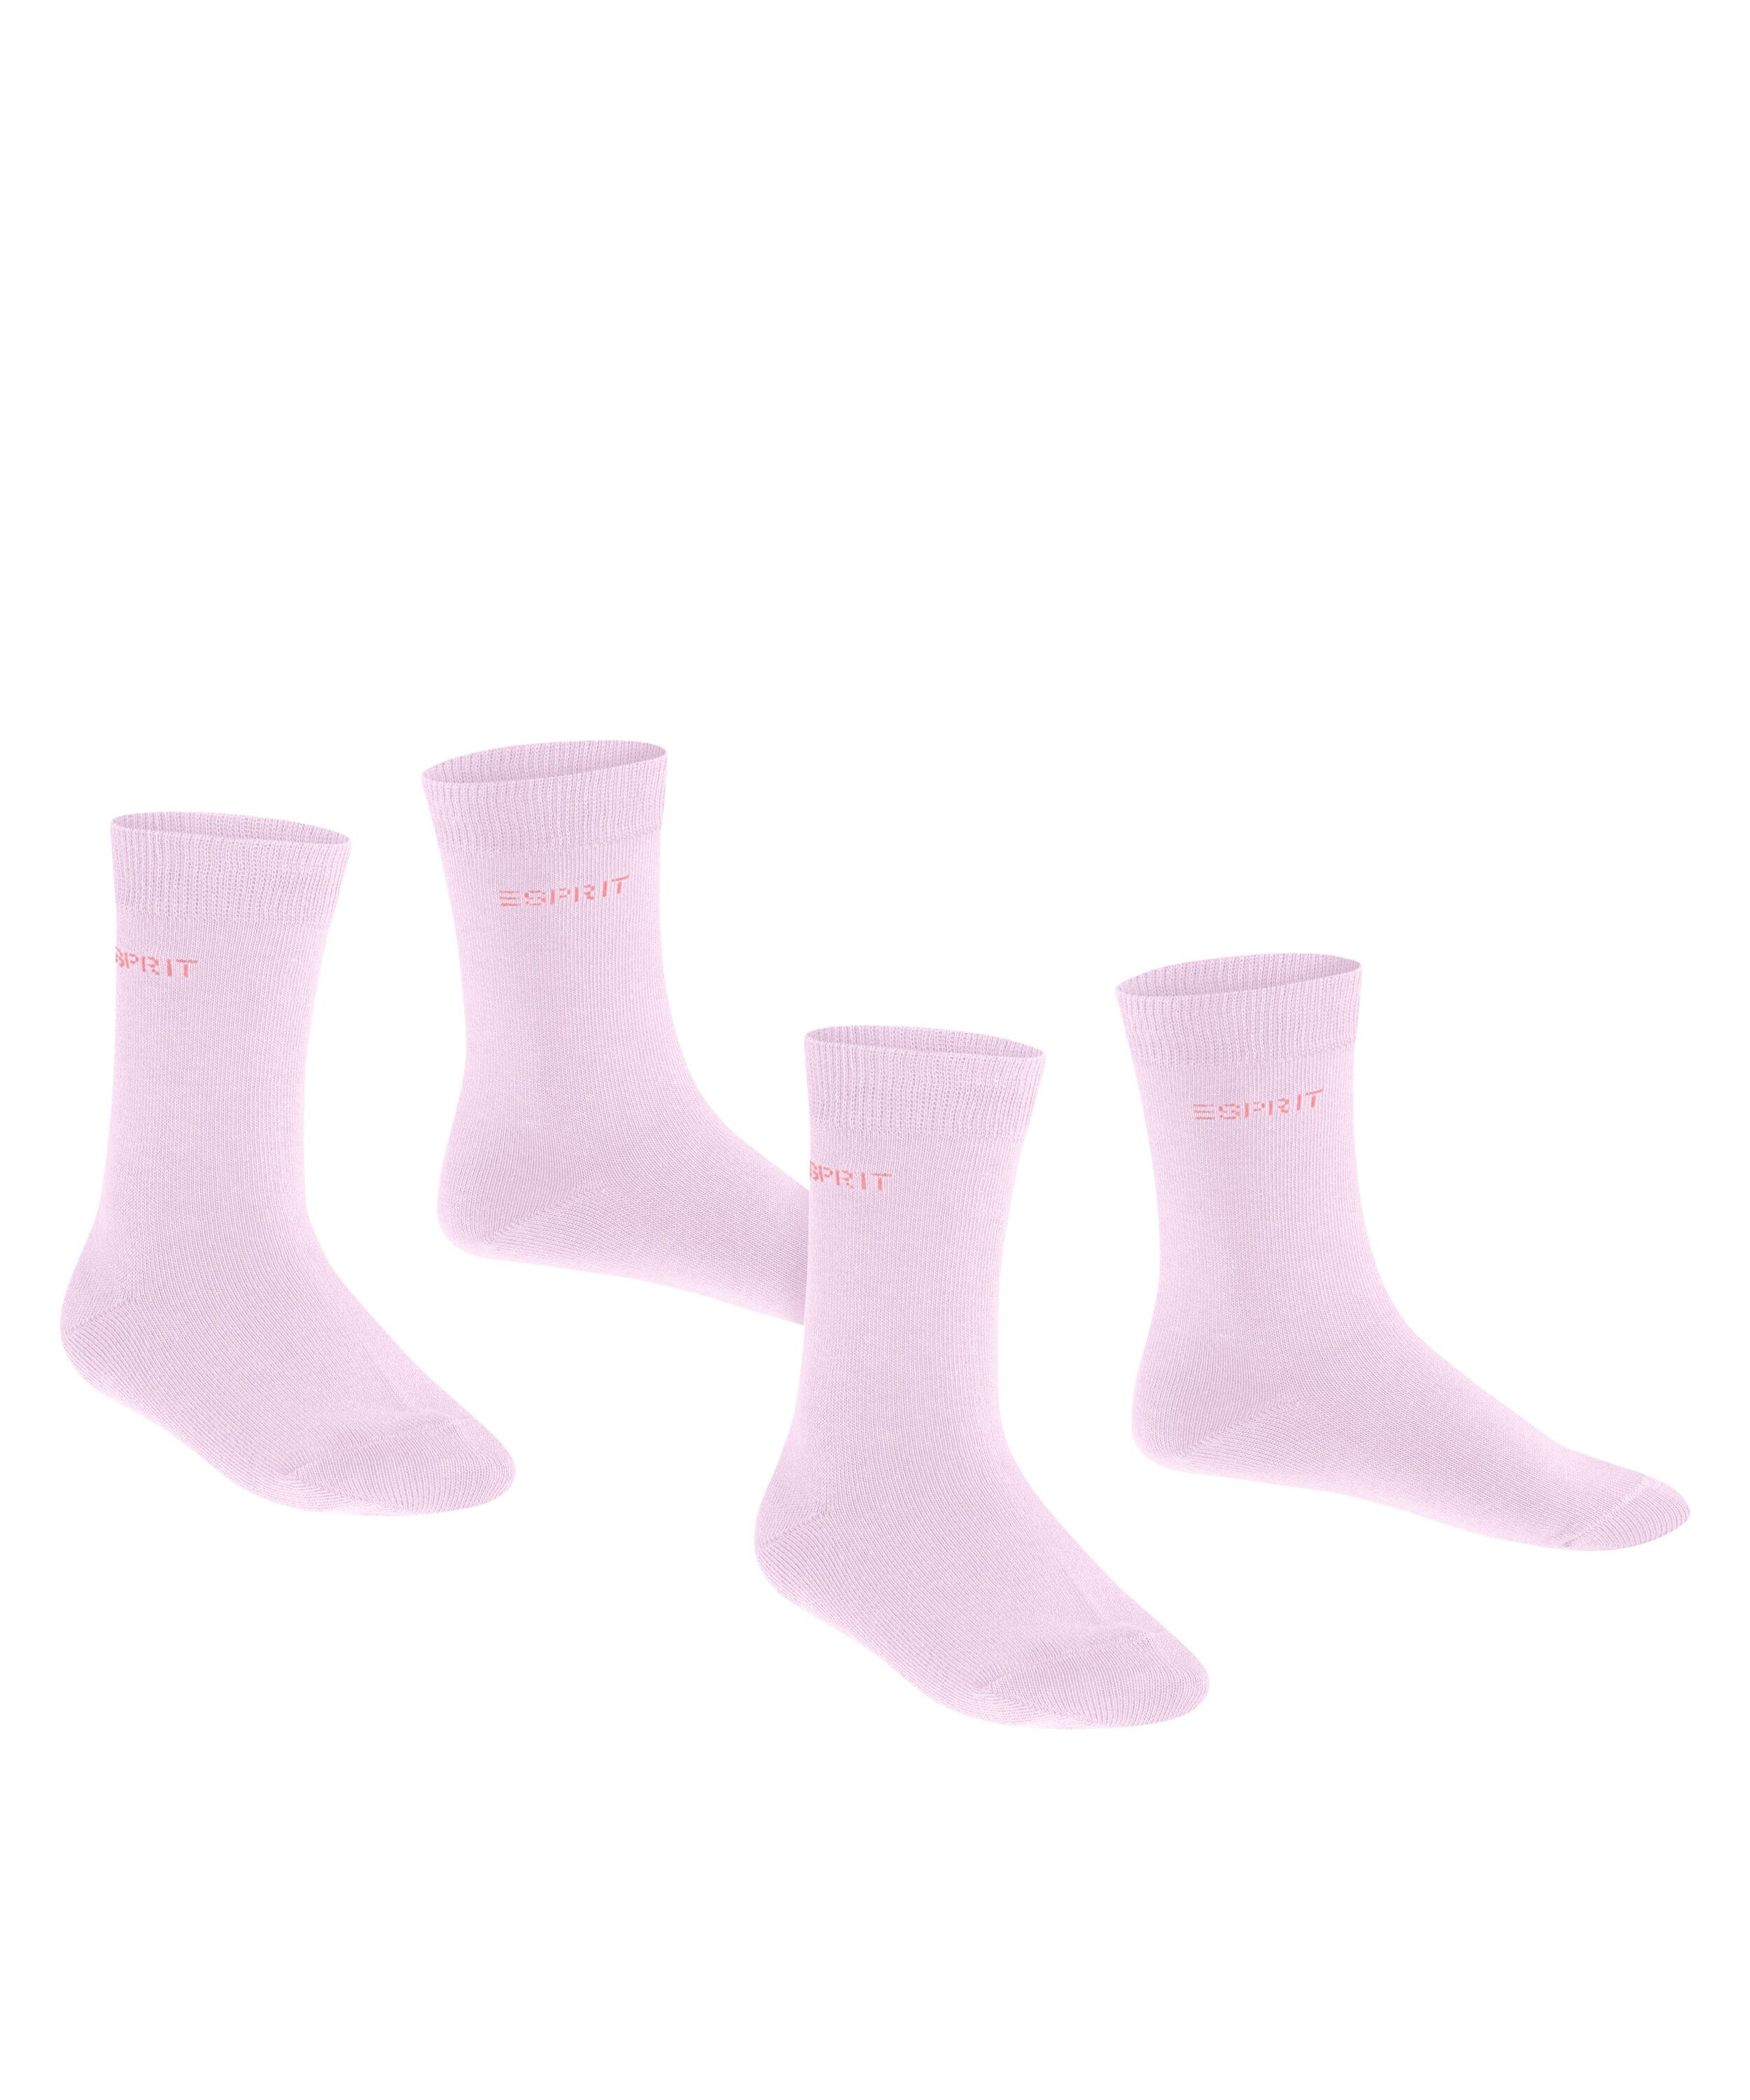 Esprit Socken Foot Logo (2-Paar) (8738) 2-Pack rose